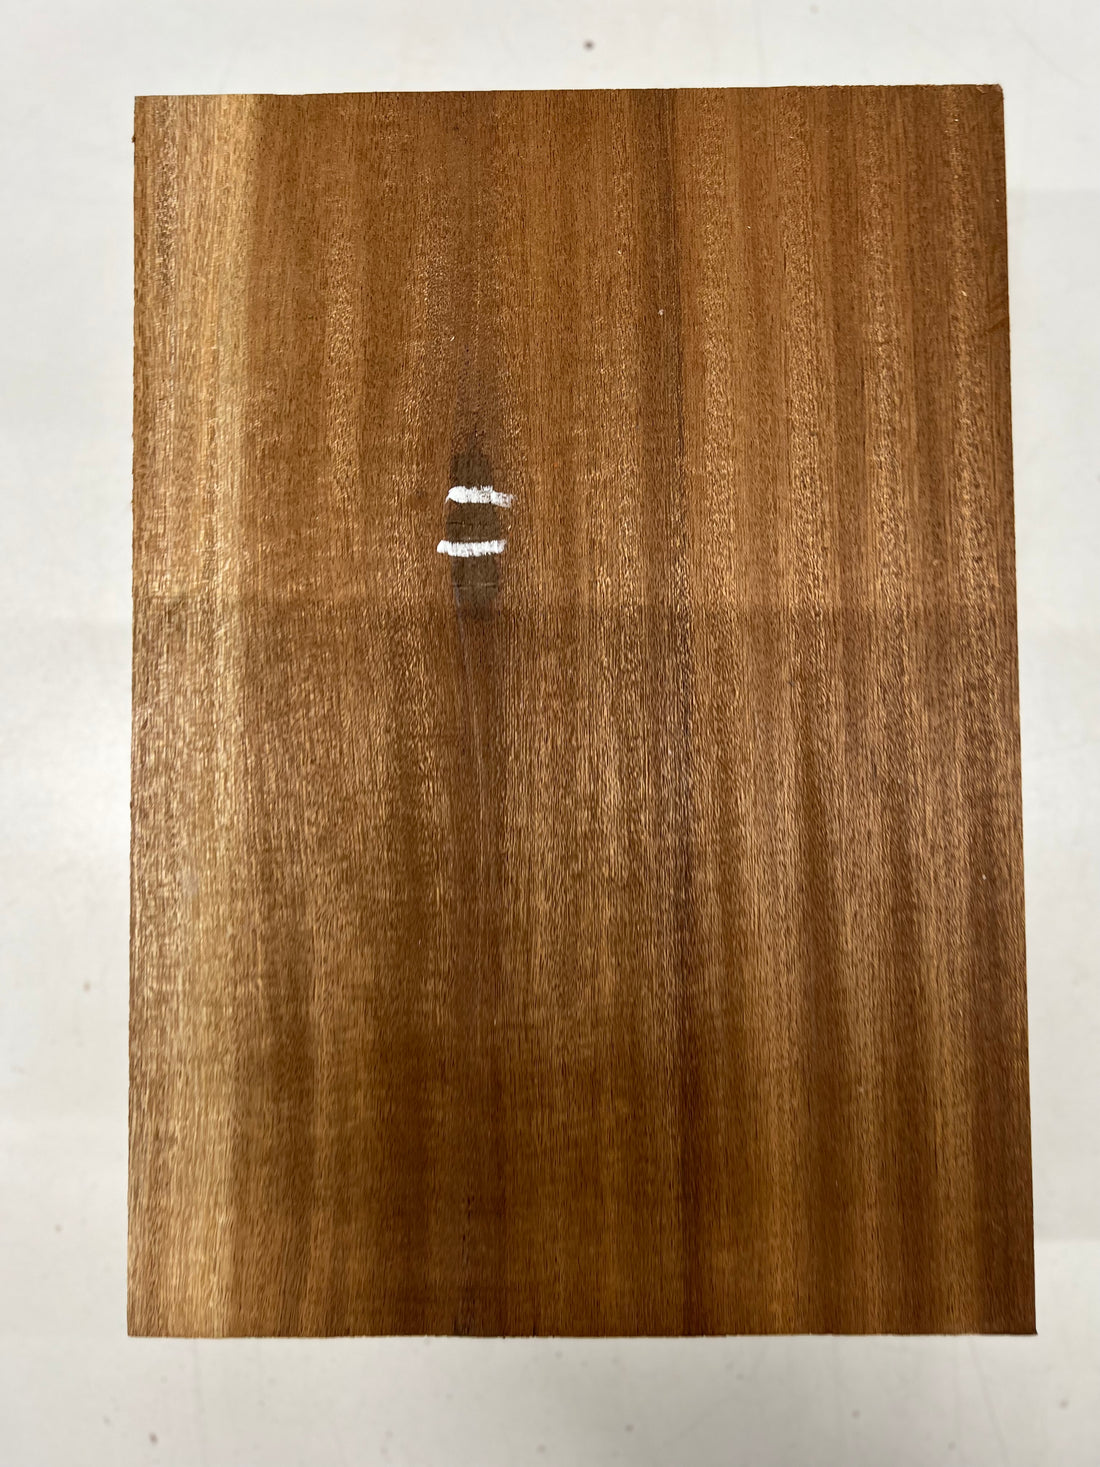 Sapele Lumber Board Wood Blank 14&quot;x 10&quot;x 2-7/8&quot; 